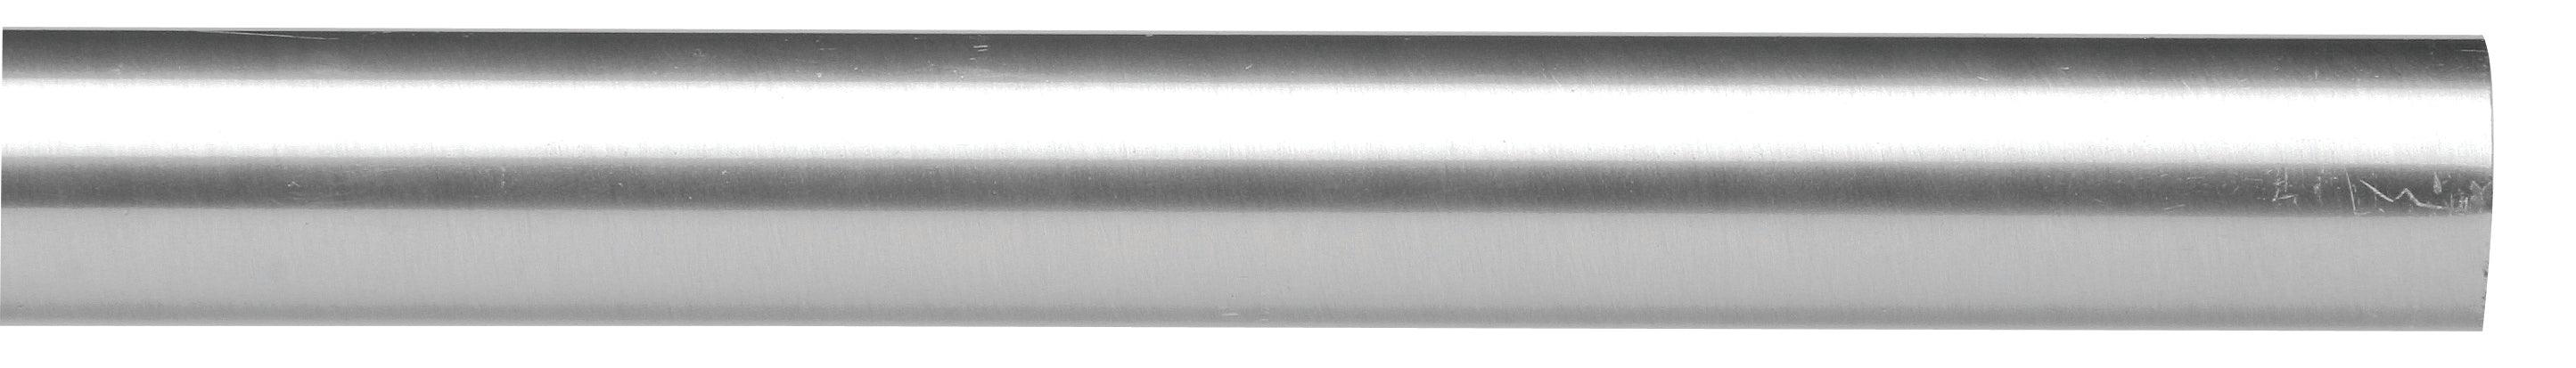 1-3/16" Acero Stainless Steel Pole - Alan Richard Textiles, LTD Zabala 1-3/16" Acero Stainless Steel